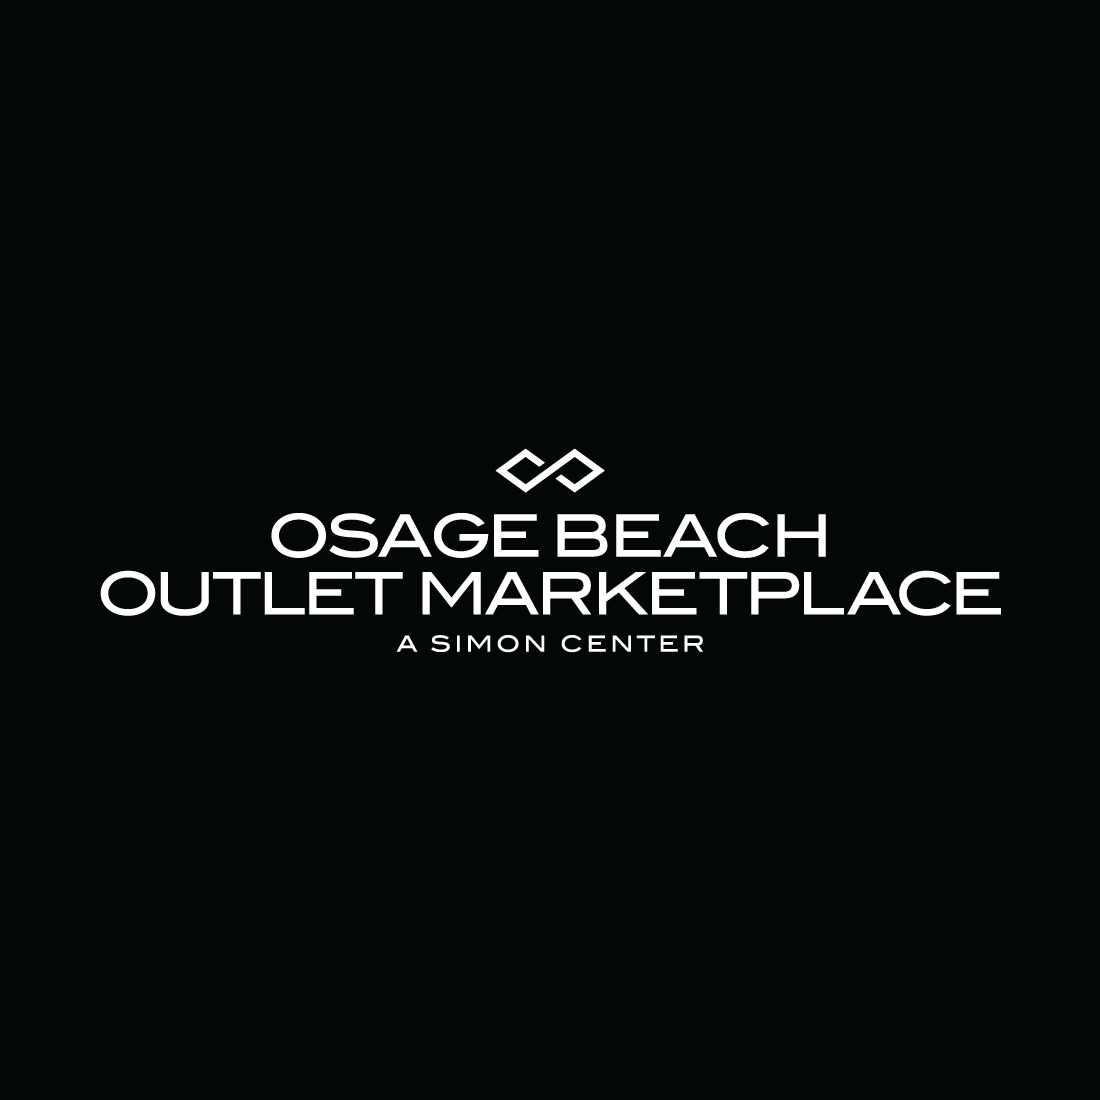 Osage Beach Outlet Marketplace, Osage Beach Missouri (MO) - www.bagssaleusa.com/product-category/backpacks/